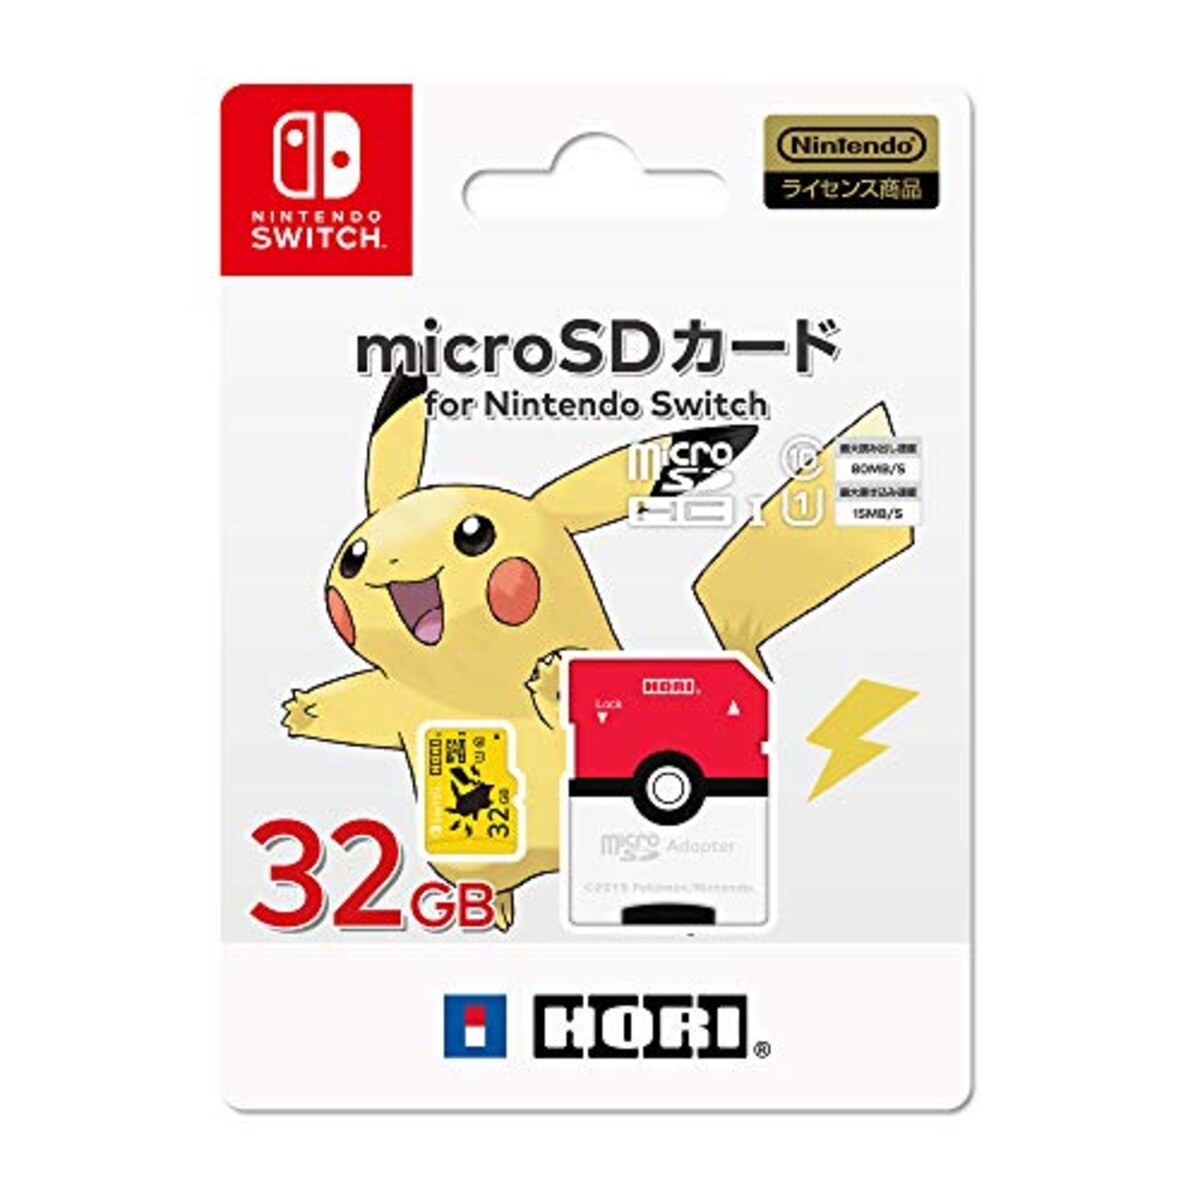 microSDカード for Nintendo Switch 32GB ピカチュウ